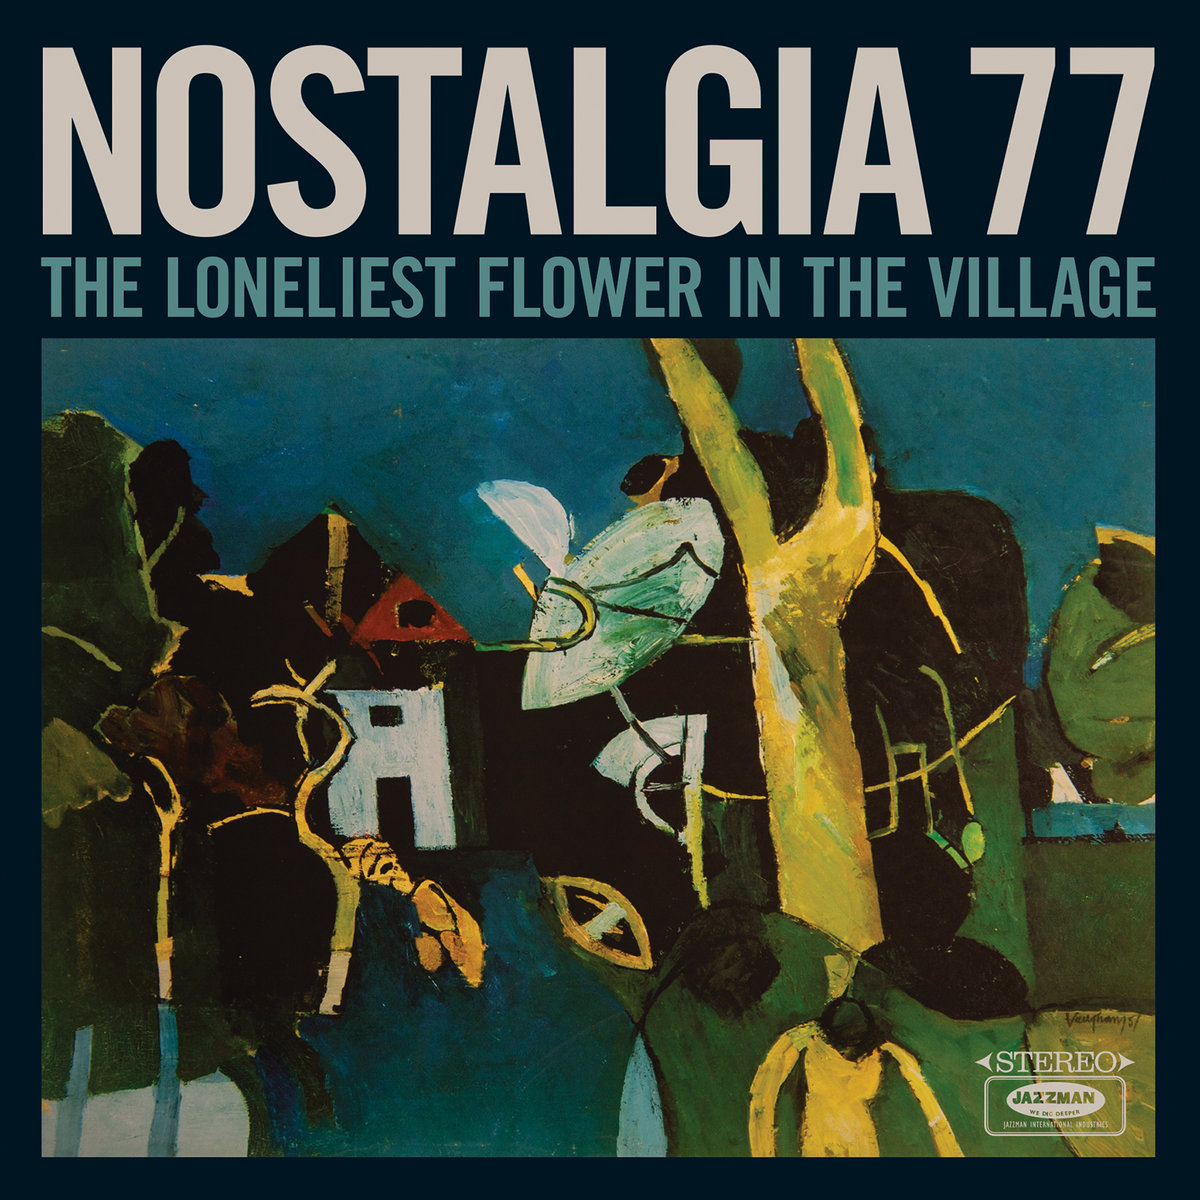 NOSTALGIA 77 - THE LONELIEST FLOWER IN THE VILLAGE - LP VINYLE